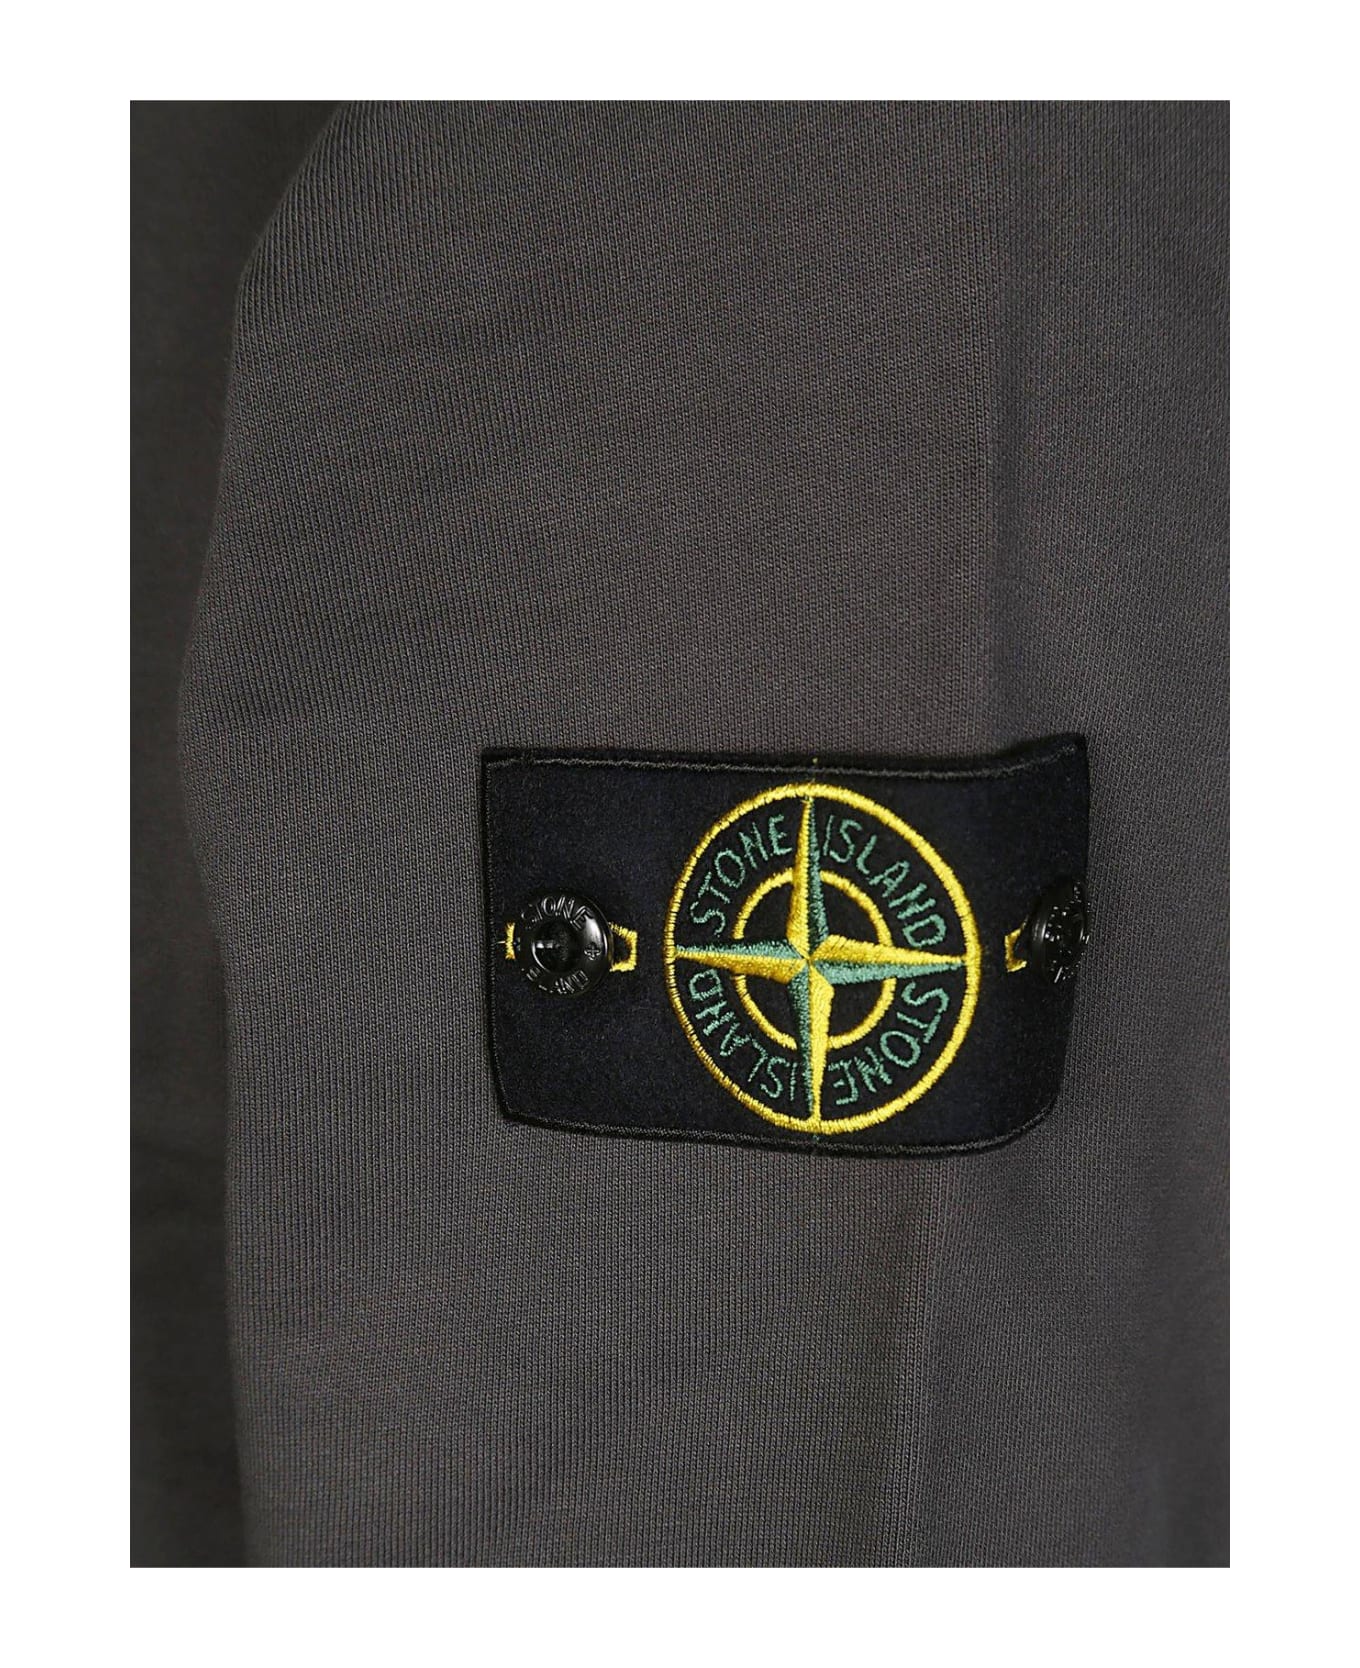 Stone Island Compass Patch Zipped Sweatshirt - Grigio